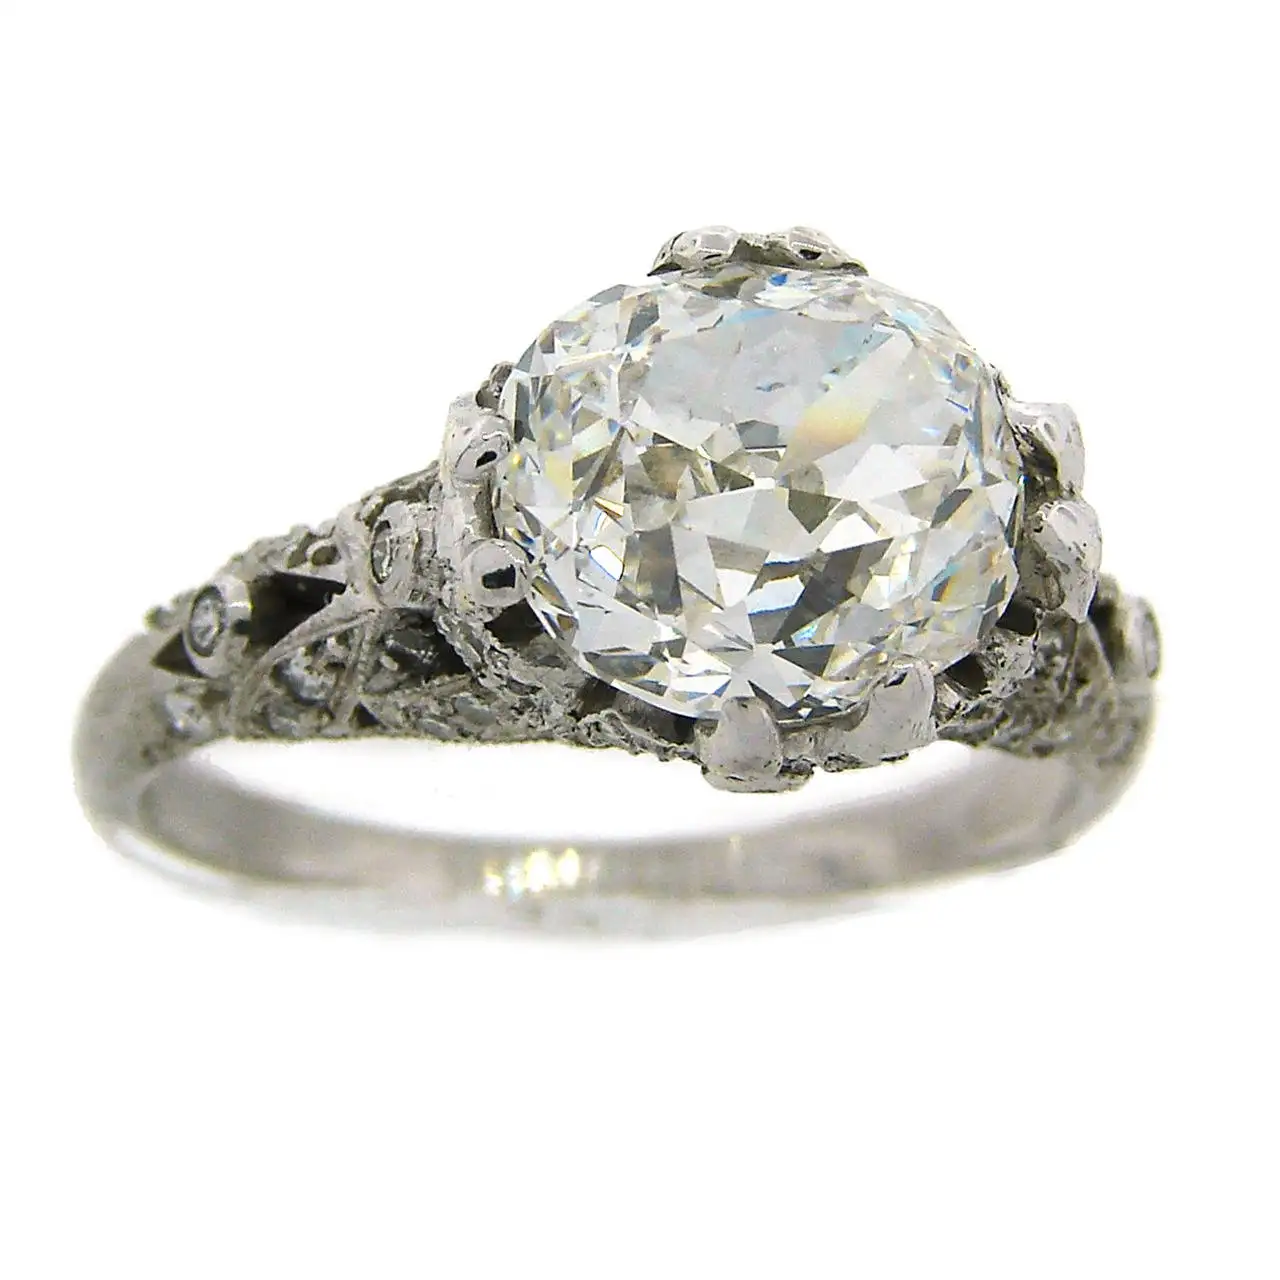 Cushion-Cut-Diamond-Platinum-Ring-Art-Deco-circa-1920s-3.02-carat-GIA-G-SI1-1.webp